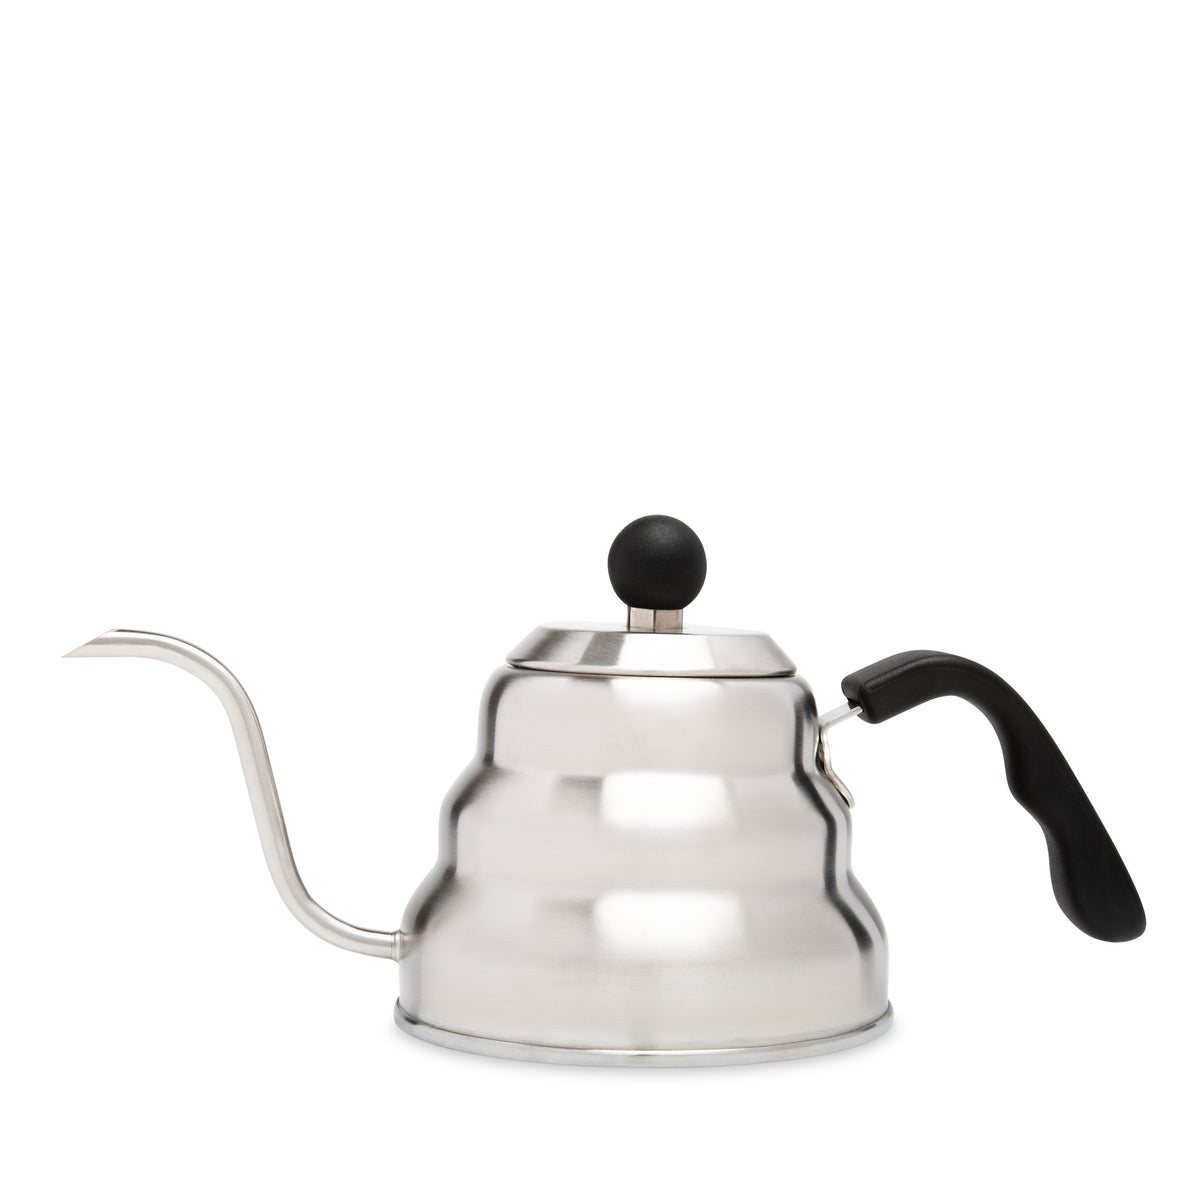 Pour-Over Coffee Gooseneck Kettle, Size: 12 oz, Silver